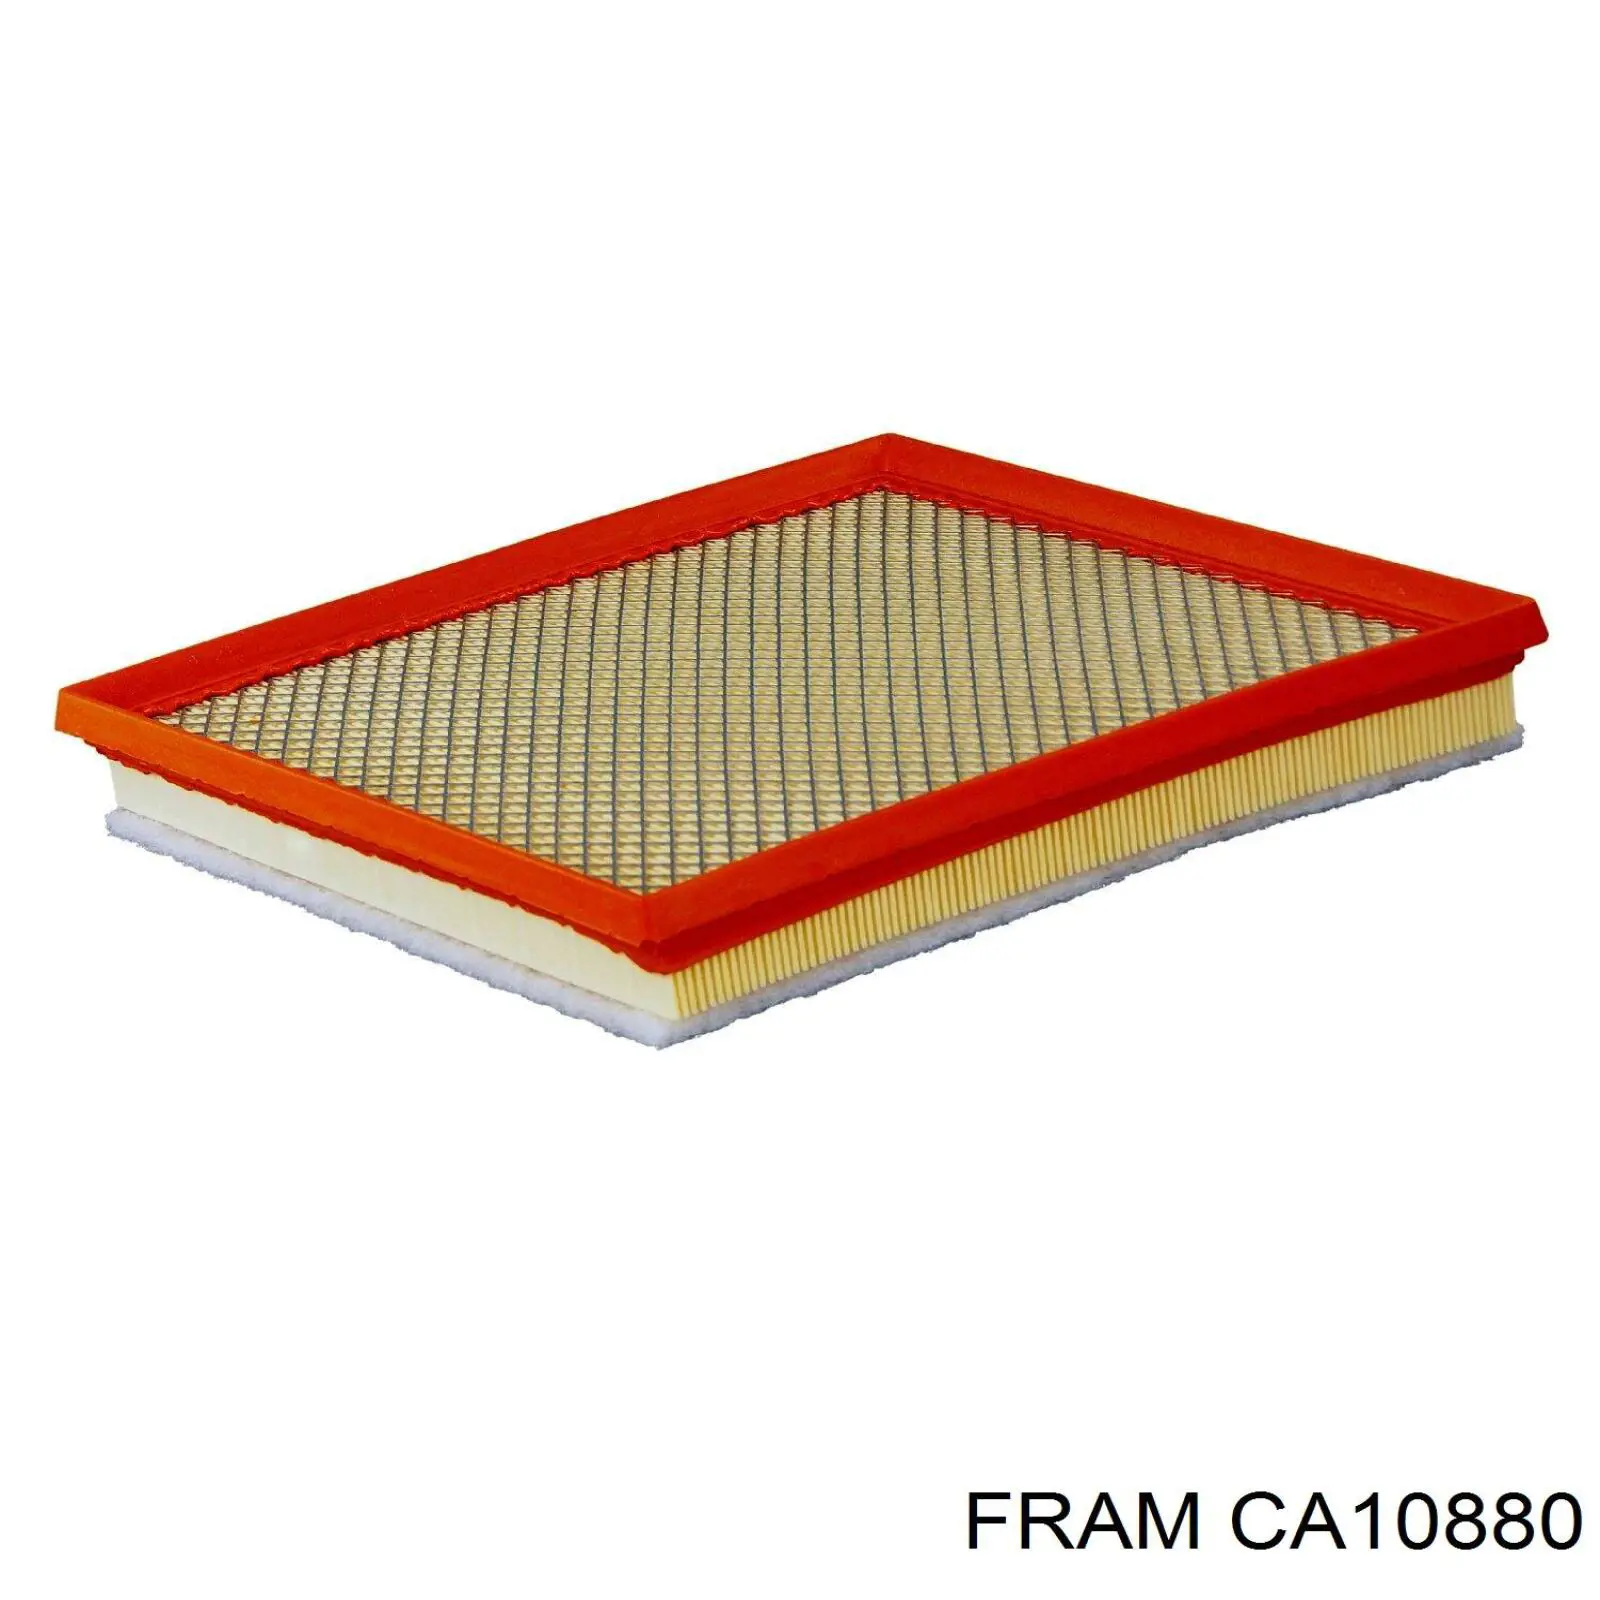 CA10880 Fram filtro de aire